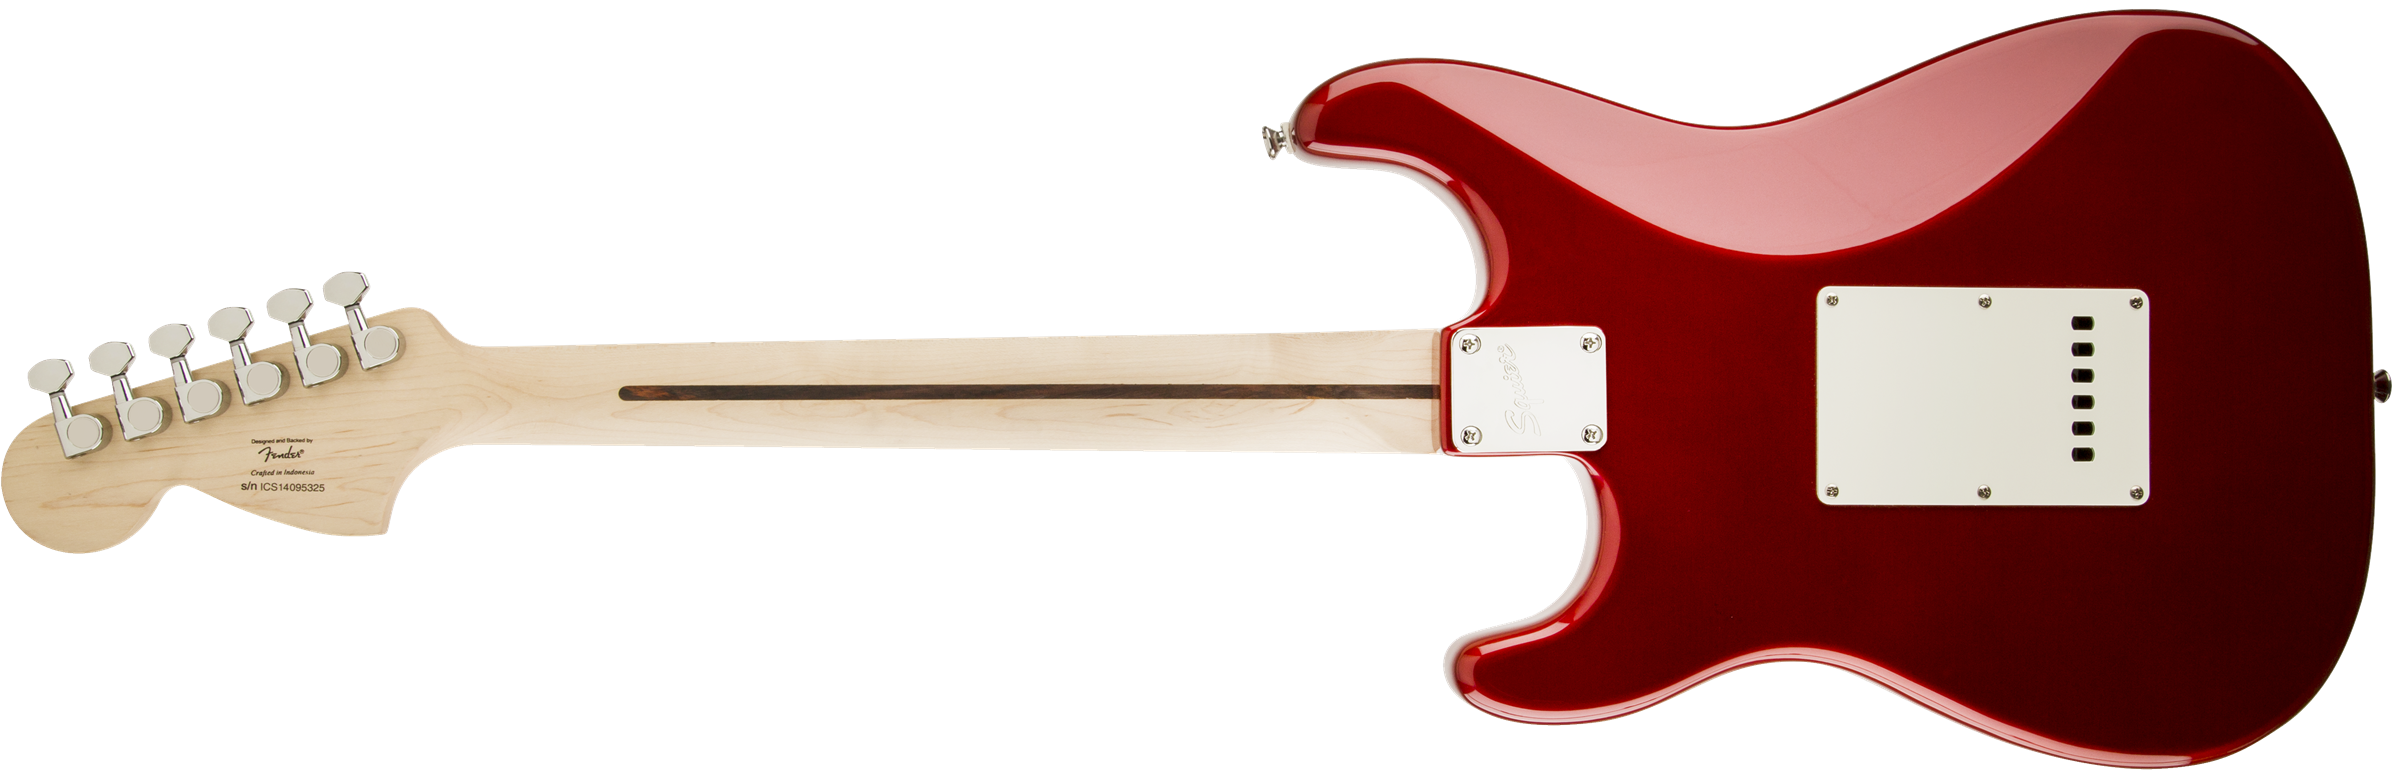 Squier Strat Standard Mn - Candy Apple Red - Str shape electric guitar - Variation 1